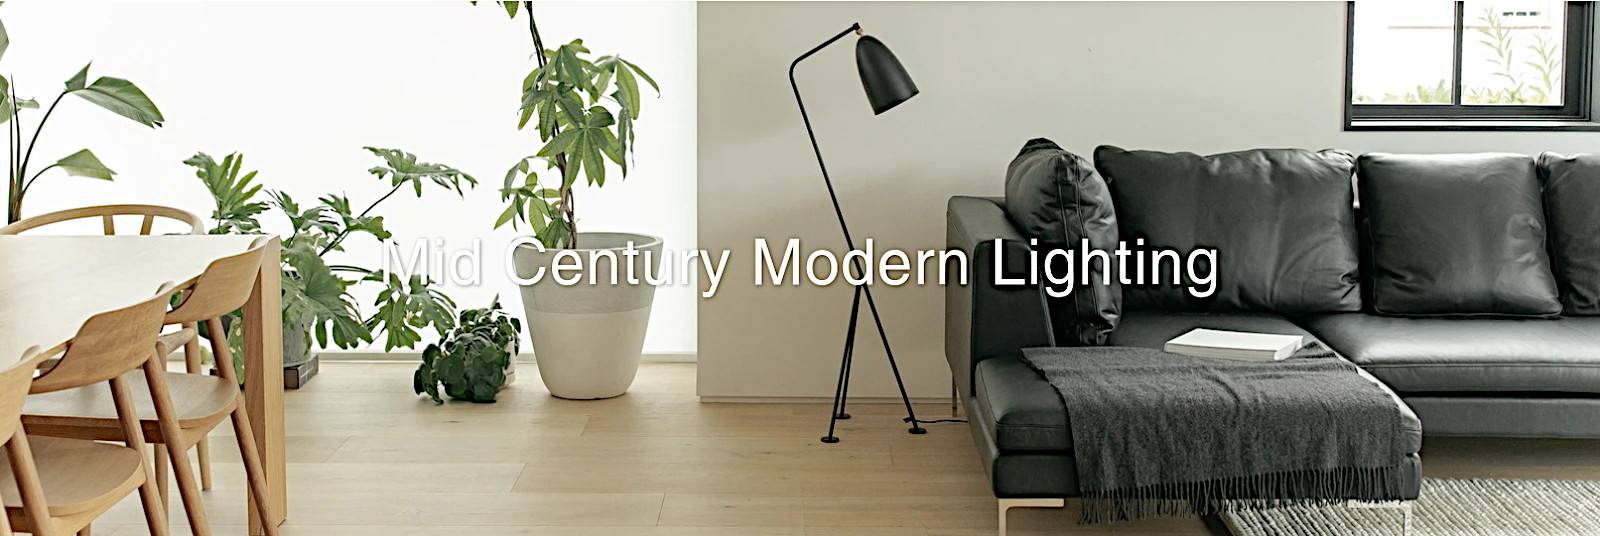 mid century modern lighting competitive price